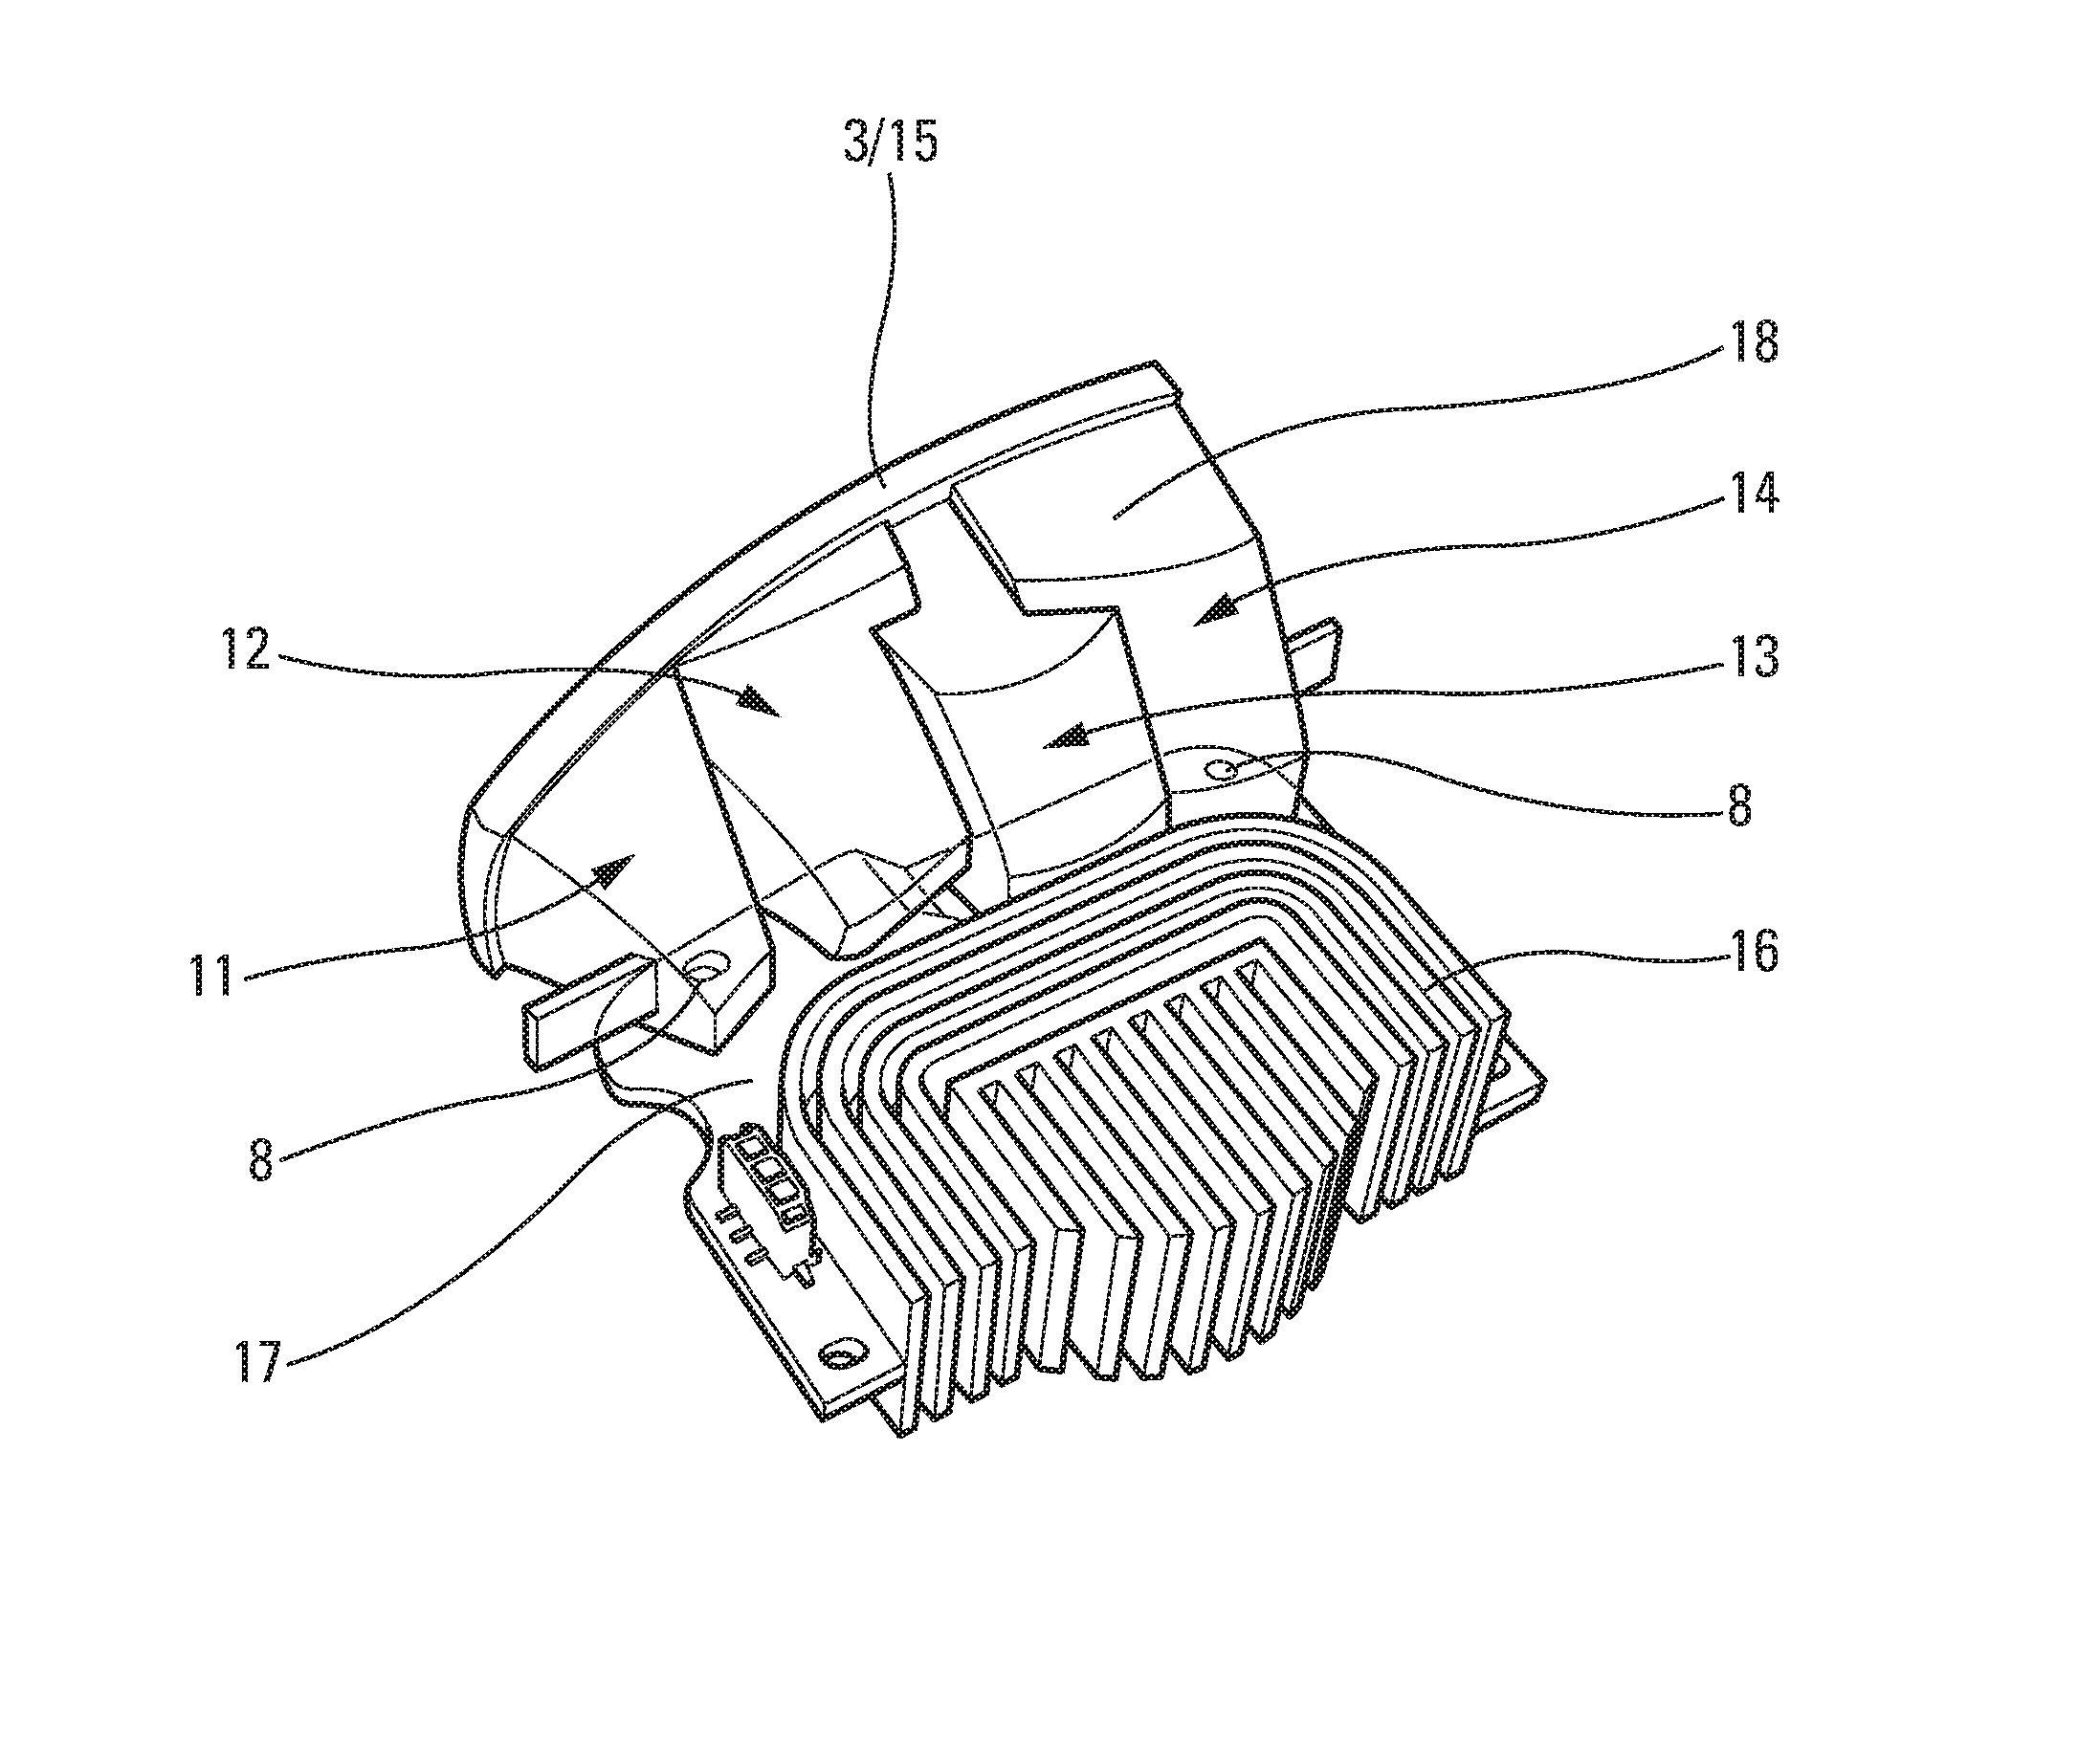 Lighting device for a motor vehicle headlight